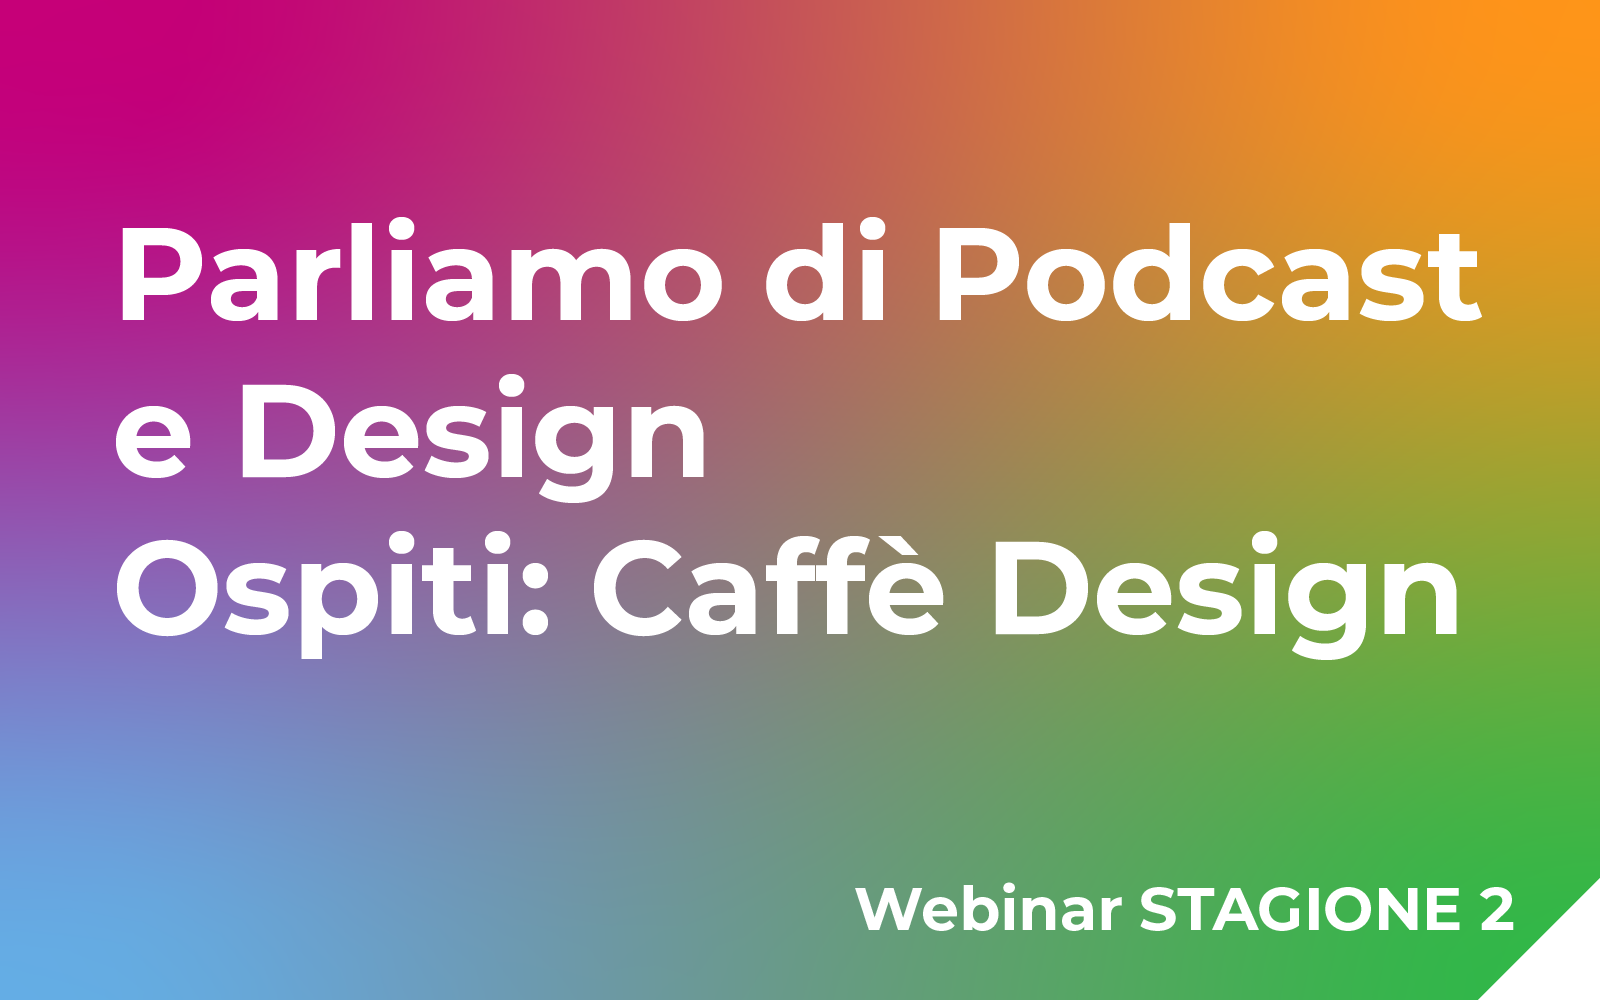 Parliamo di Podcast e Design (ospiti: Caffè Design)